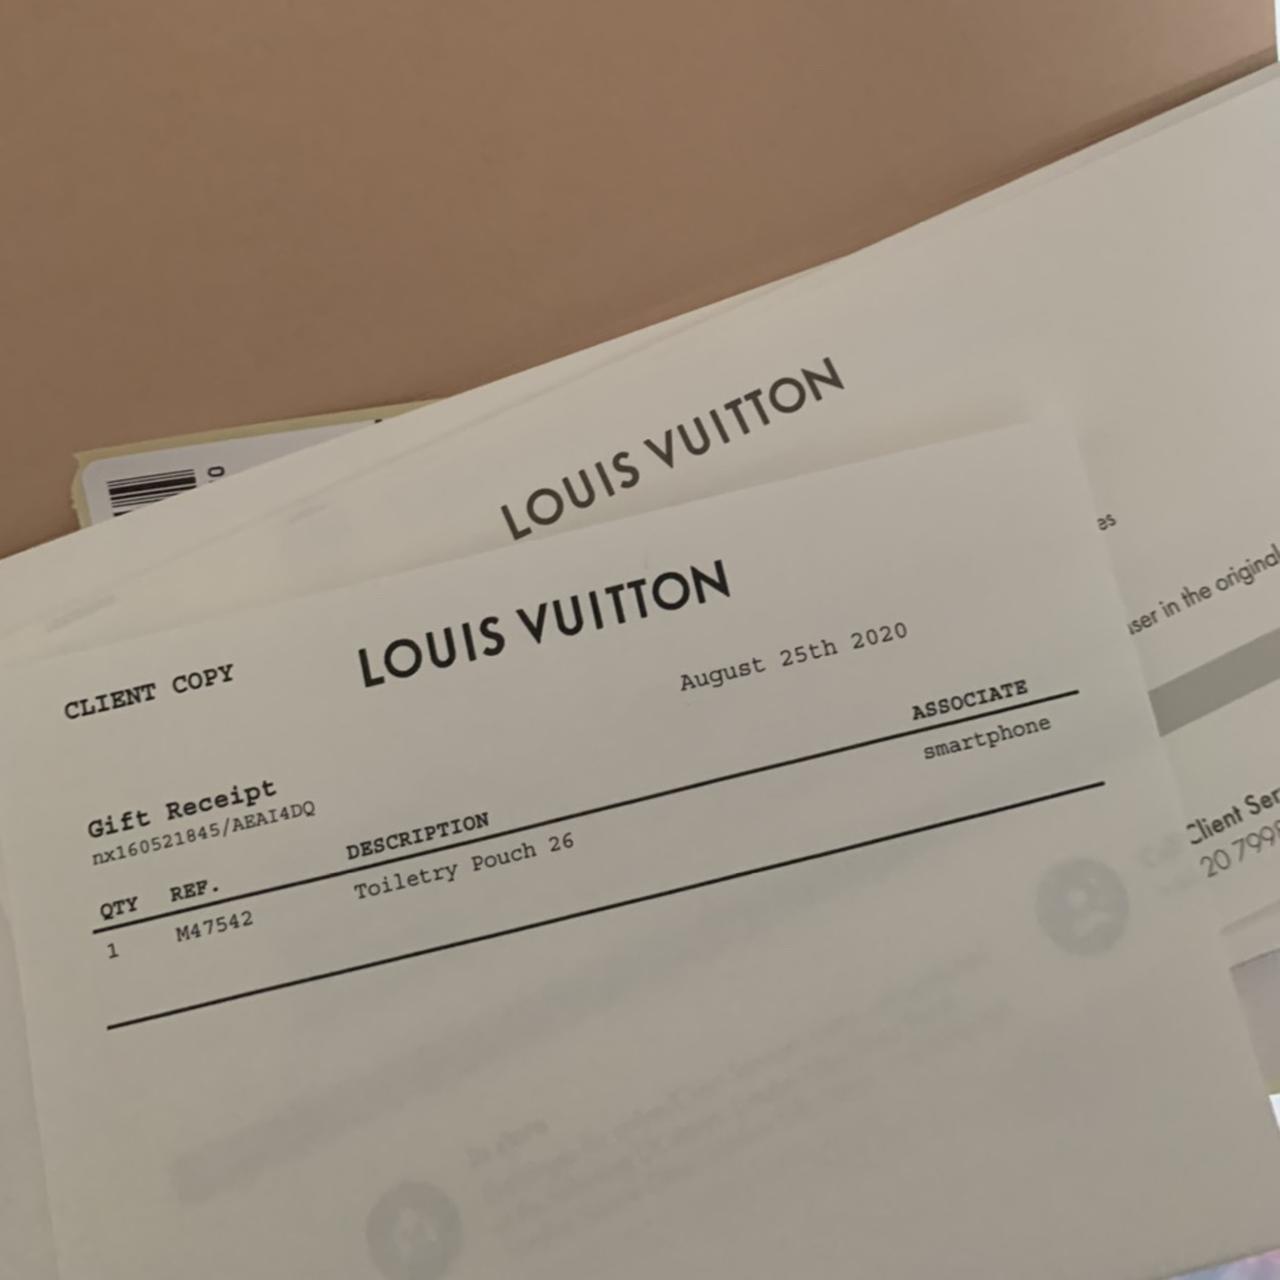 Receipt for Louis Vuitton Toiletry Pouch 26